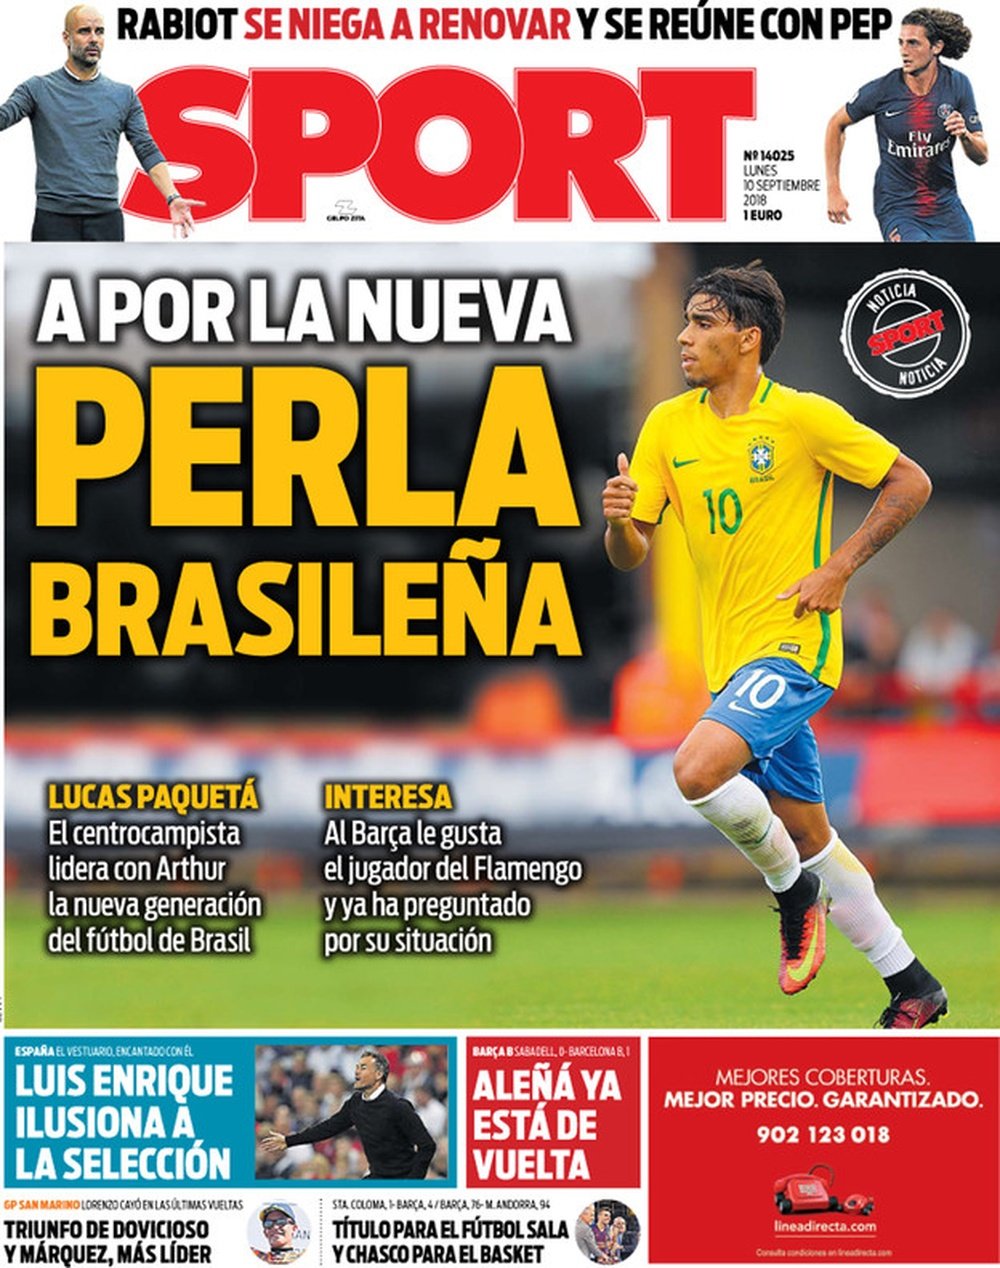 Capa do jornal 'Sport' de 10-09-18. Sport